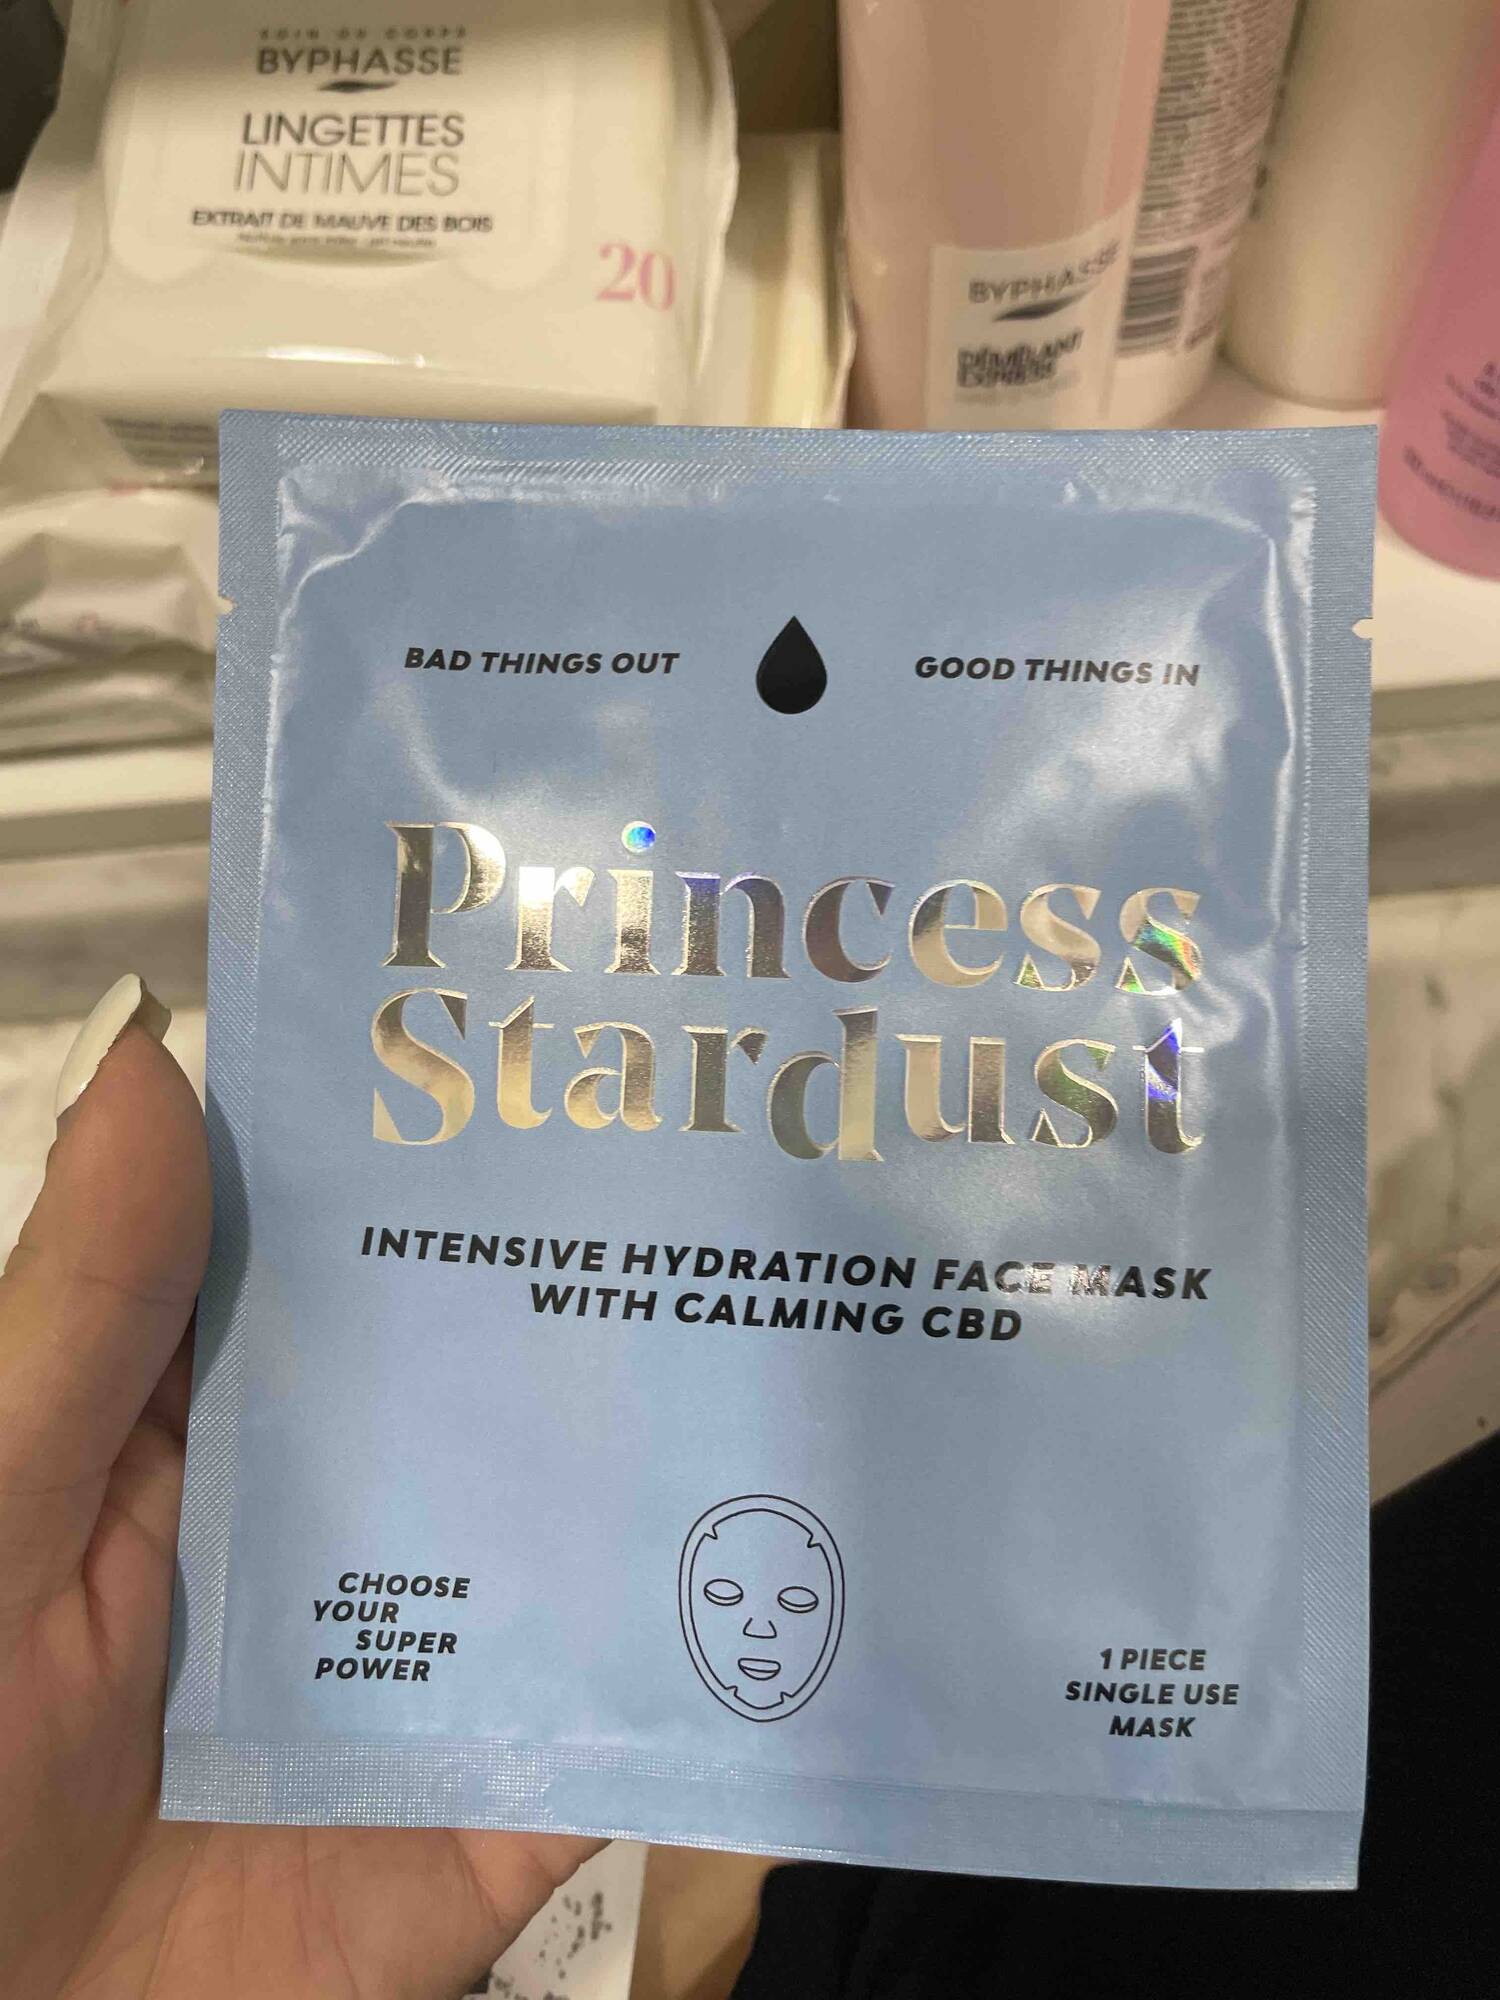 PRINCESS STARDUST - Intensive hydration face mask